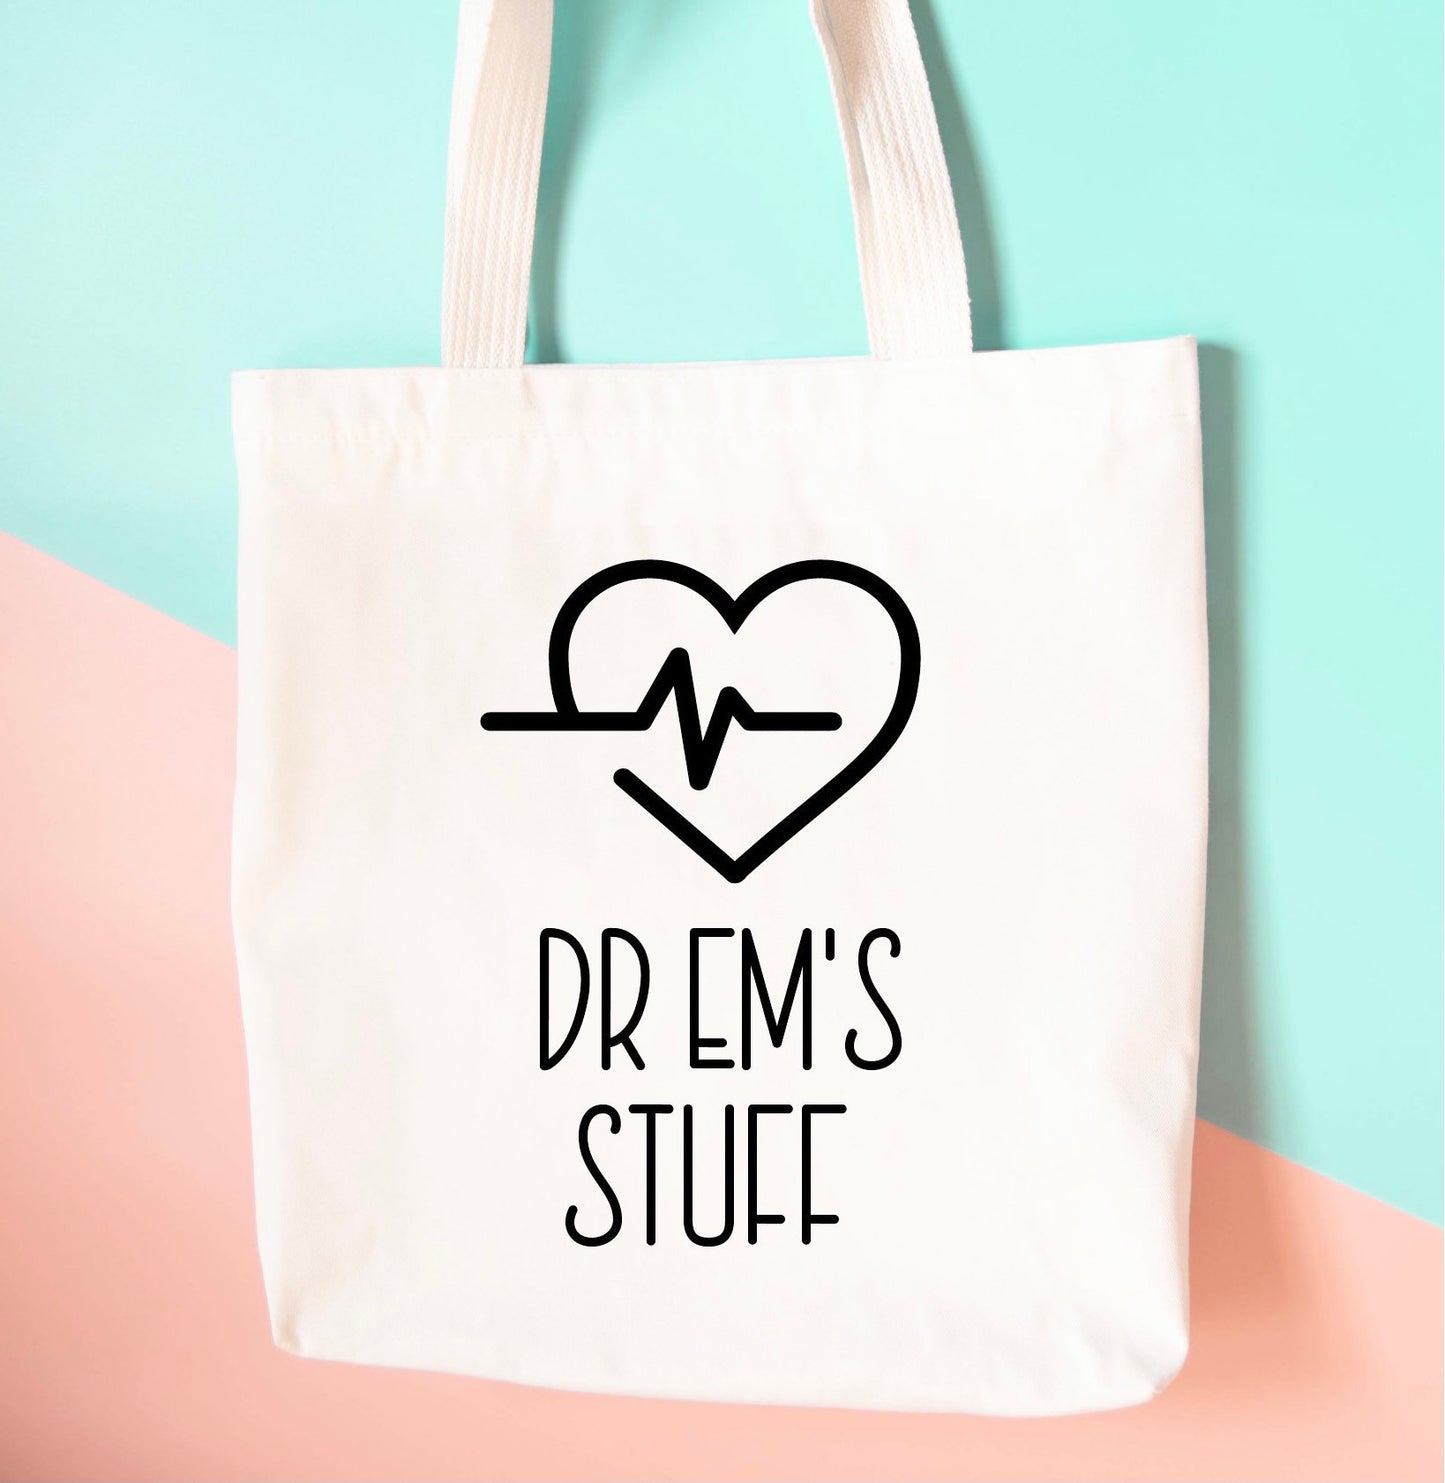 Doctor stuff tote Bag, doctors secret Santa Christmas gifts, personalised work bag for books and paperwork, gift for doctors, work bag